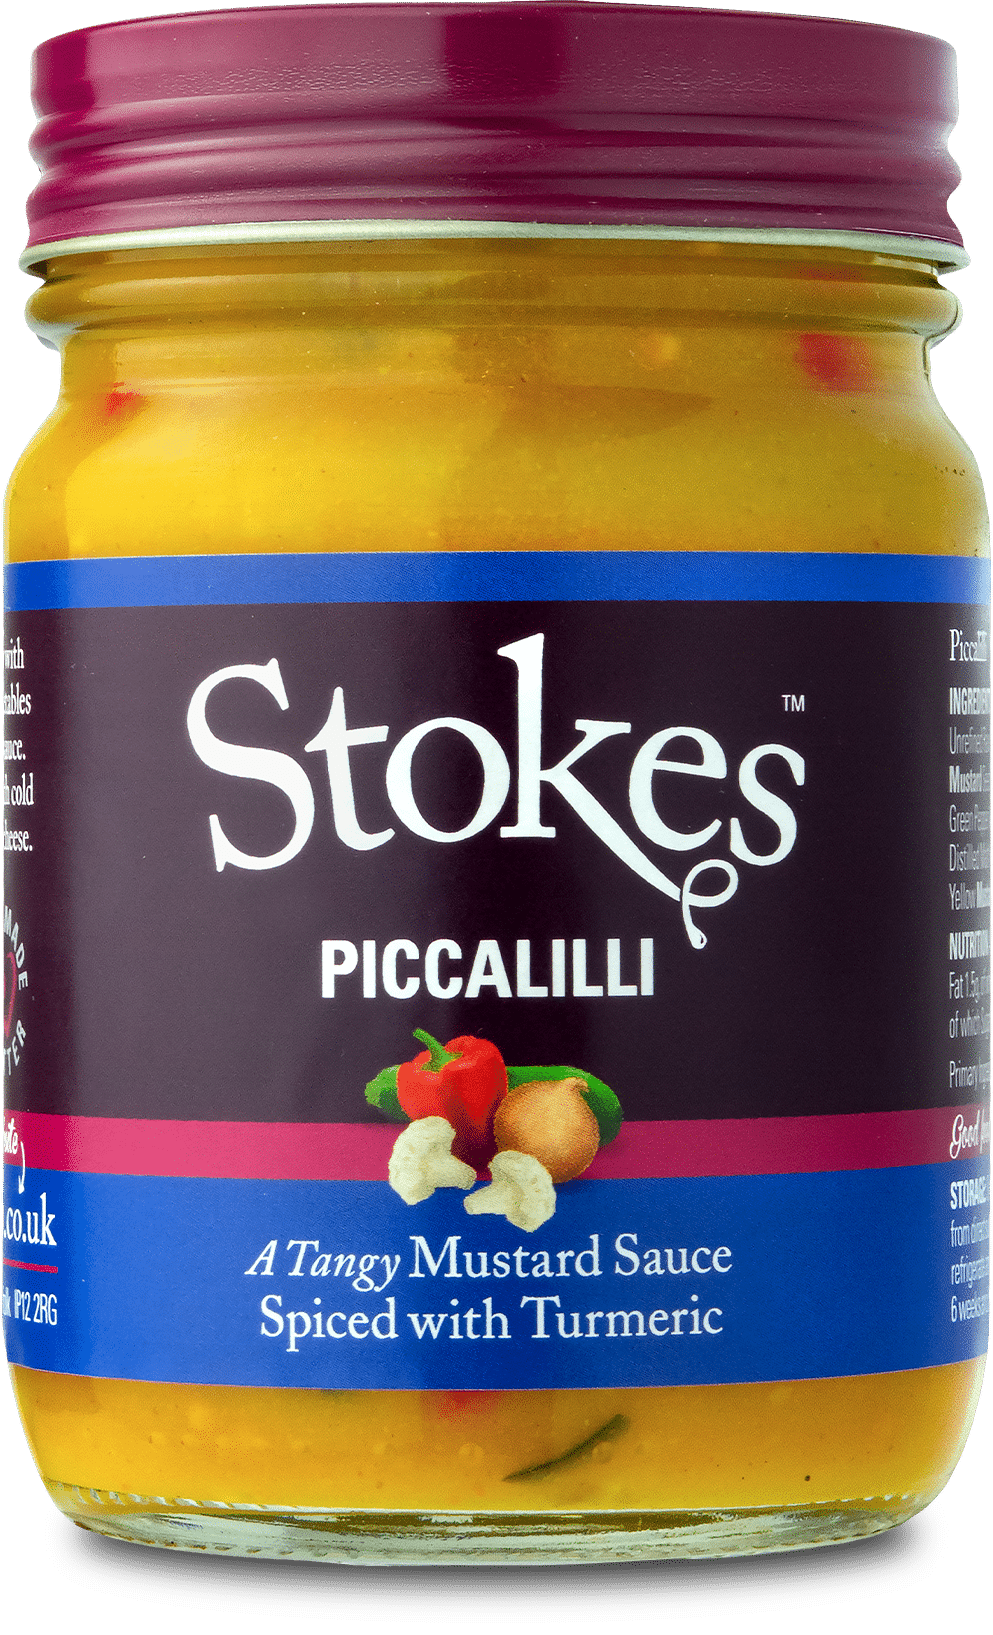 Stokes Piccalilli Shop/Website